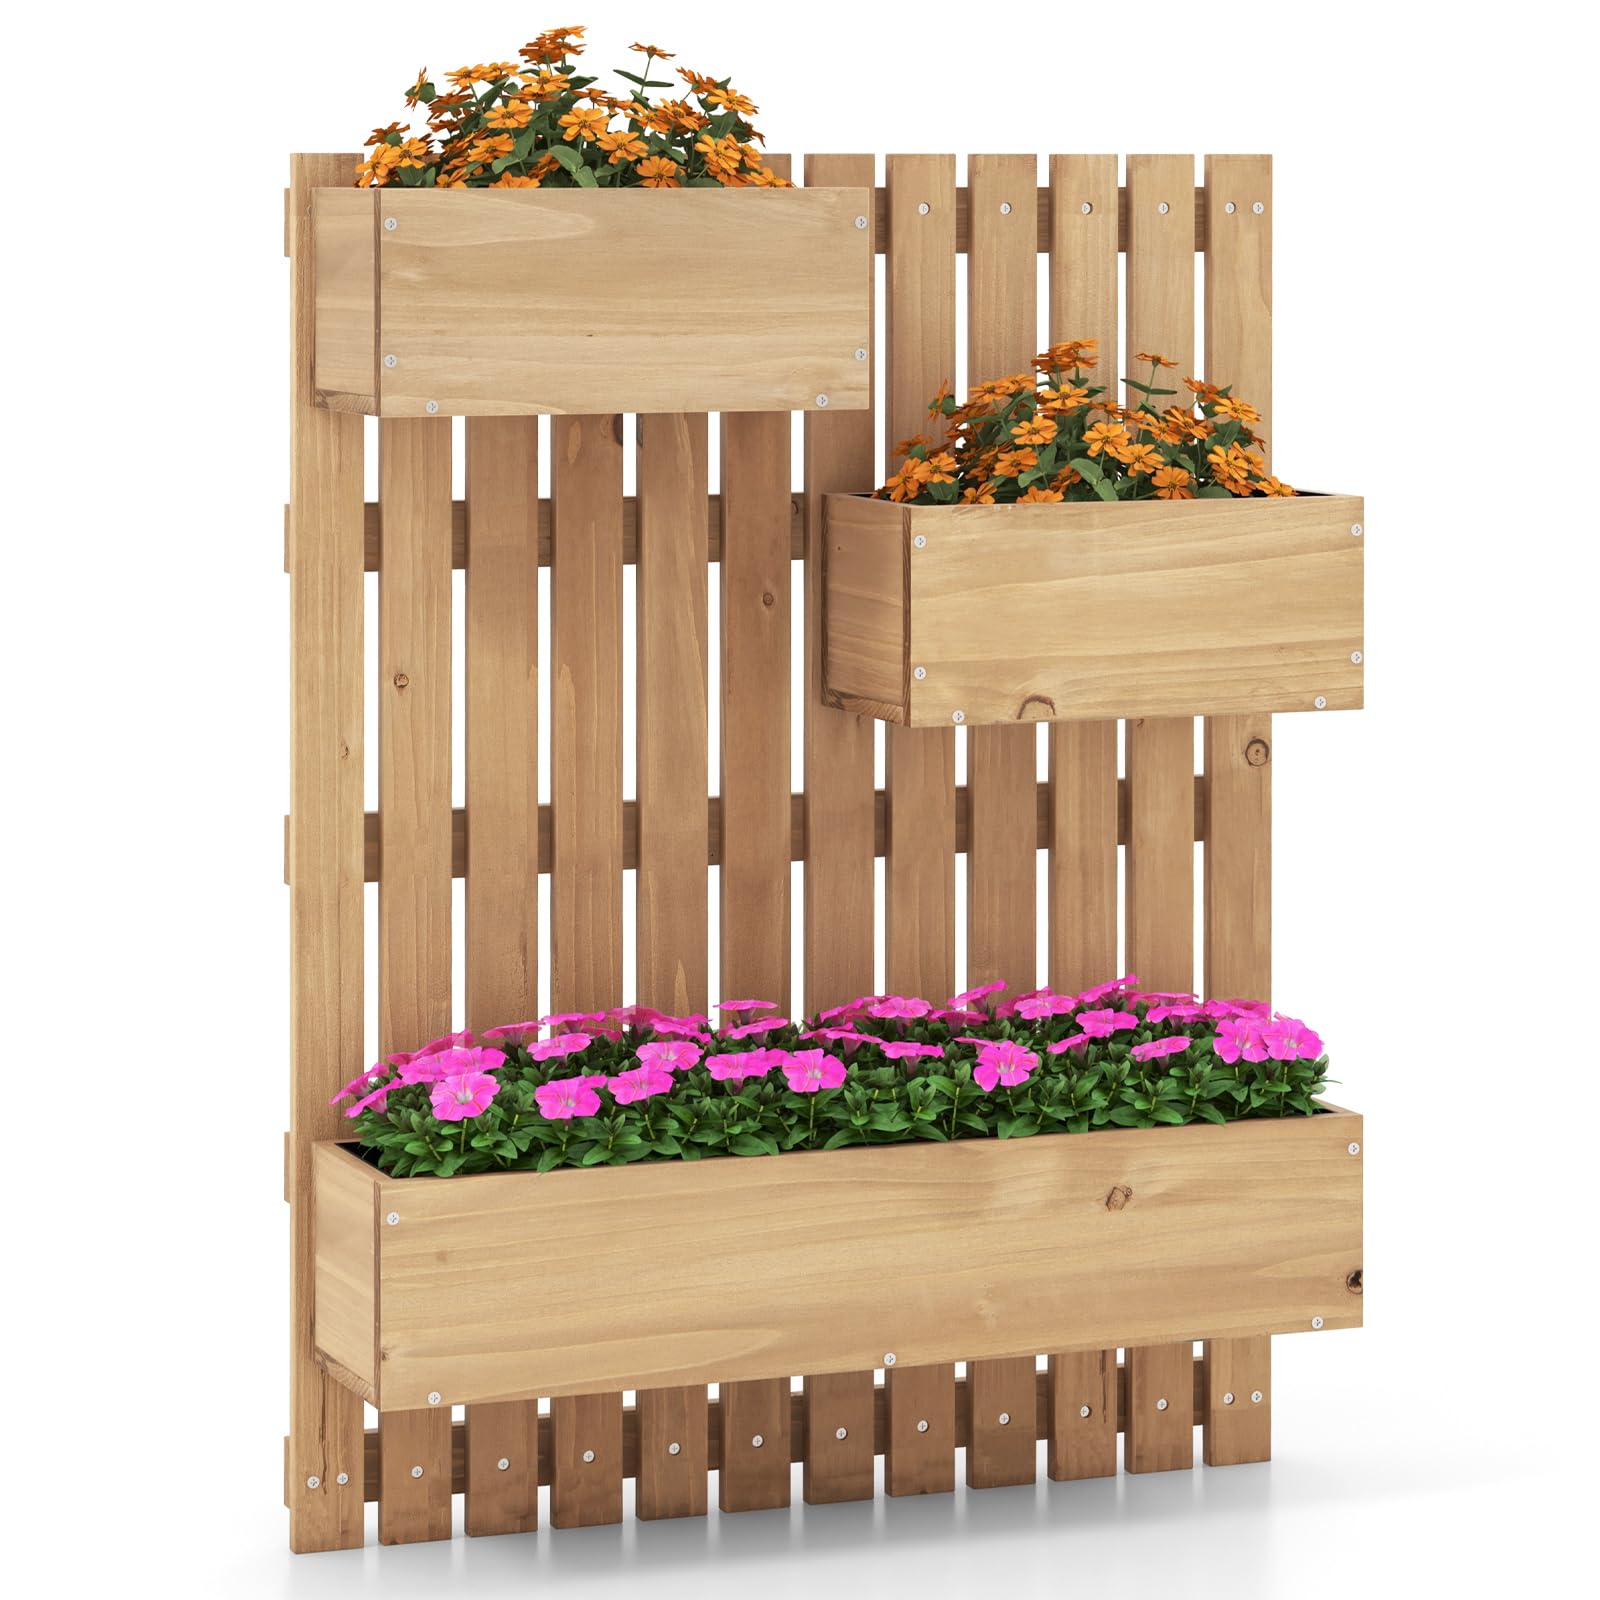 Giantex Wall-Mounted Raised Garden Bed w/Trellis Board